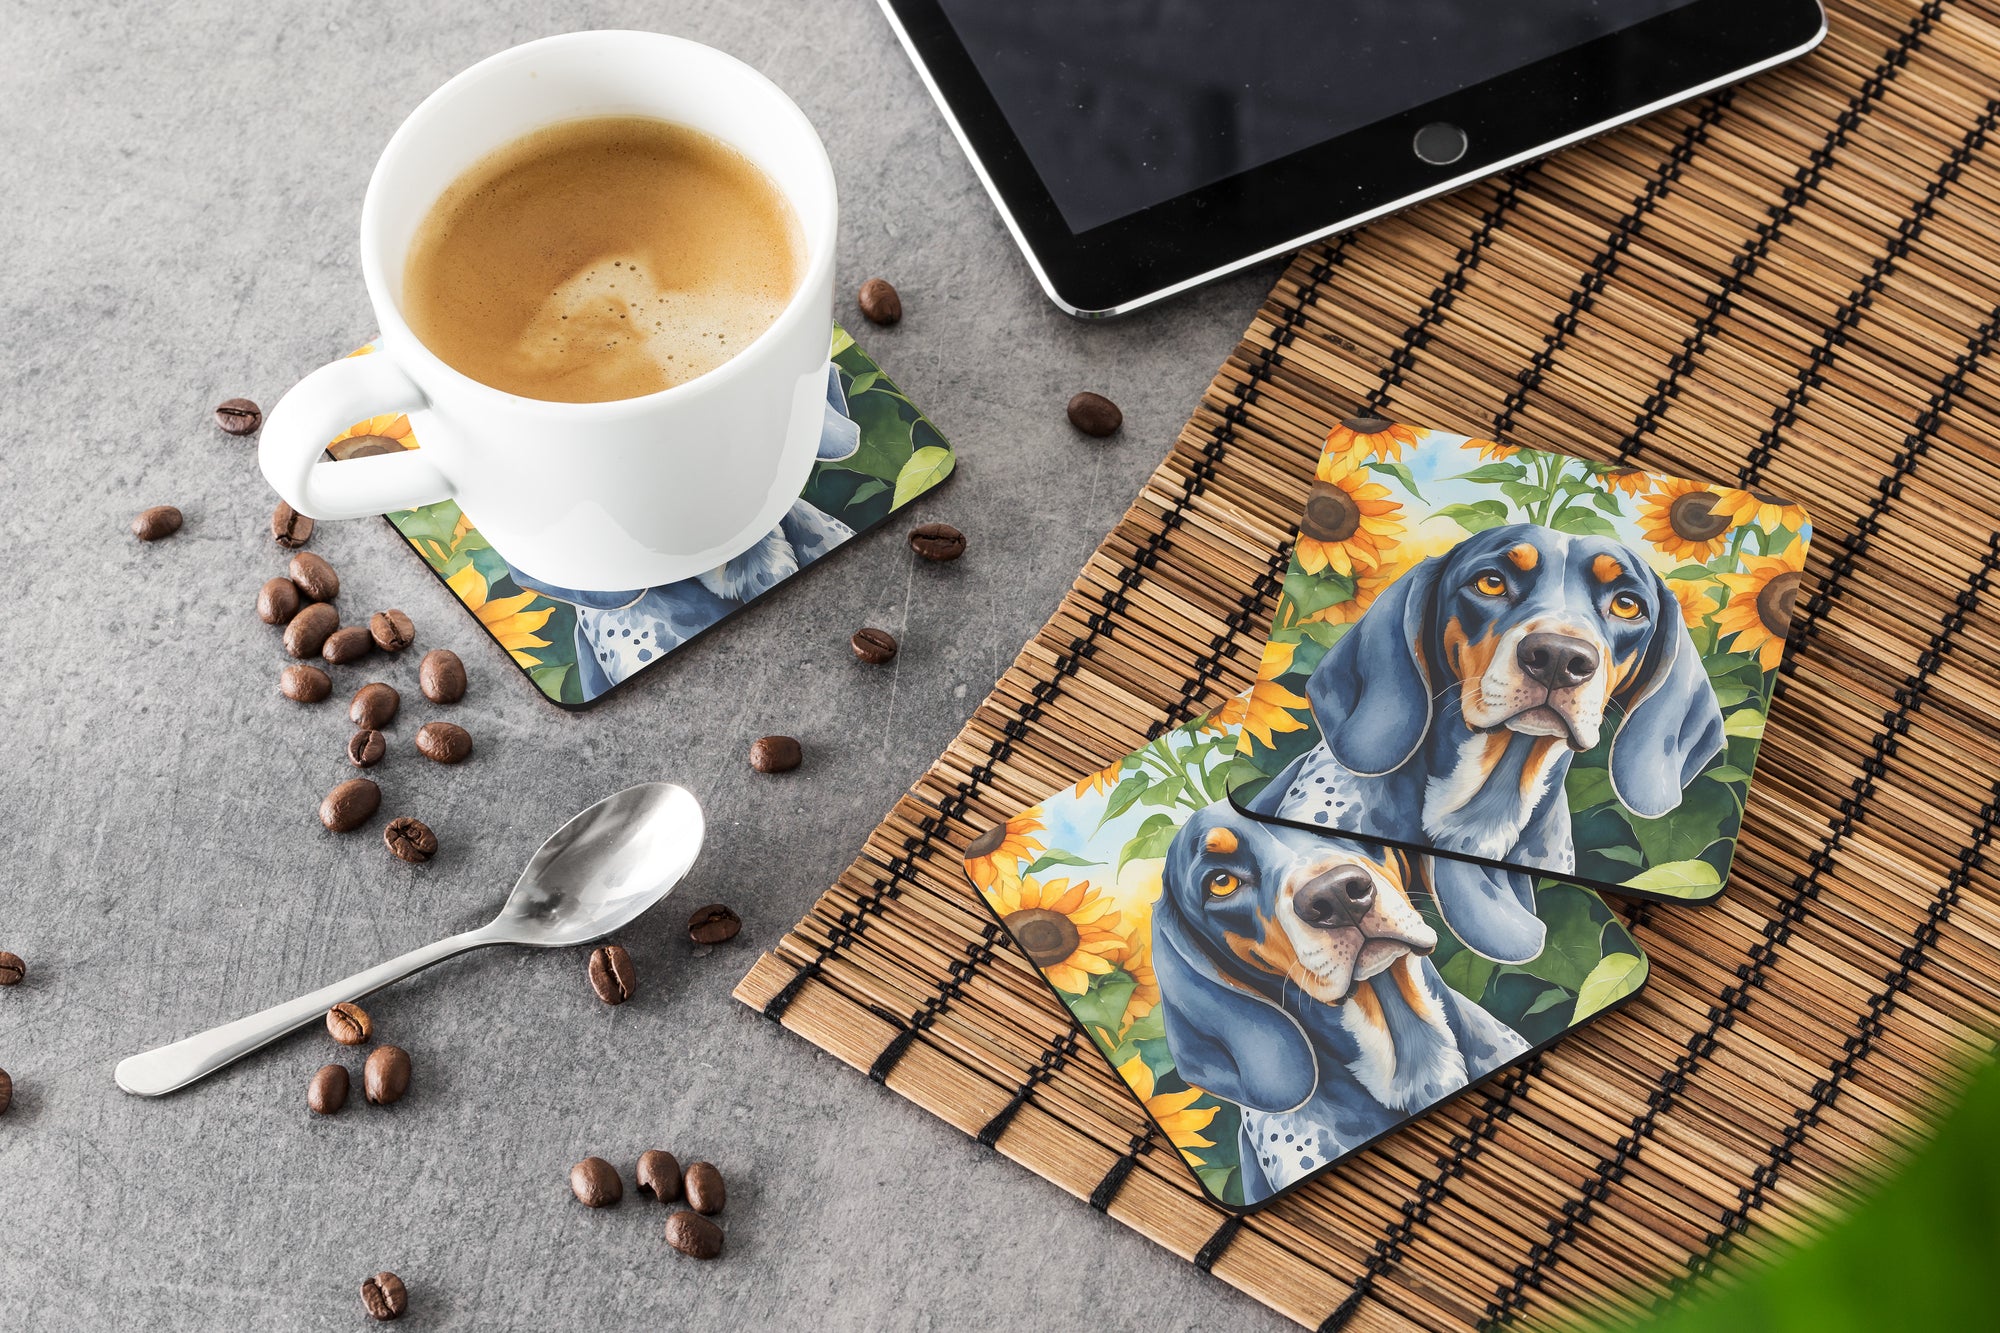 Bluetick Coonhound in Sunflowers Foam Coasters